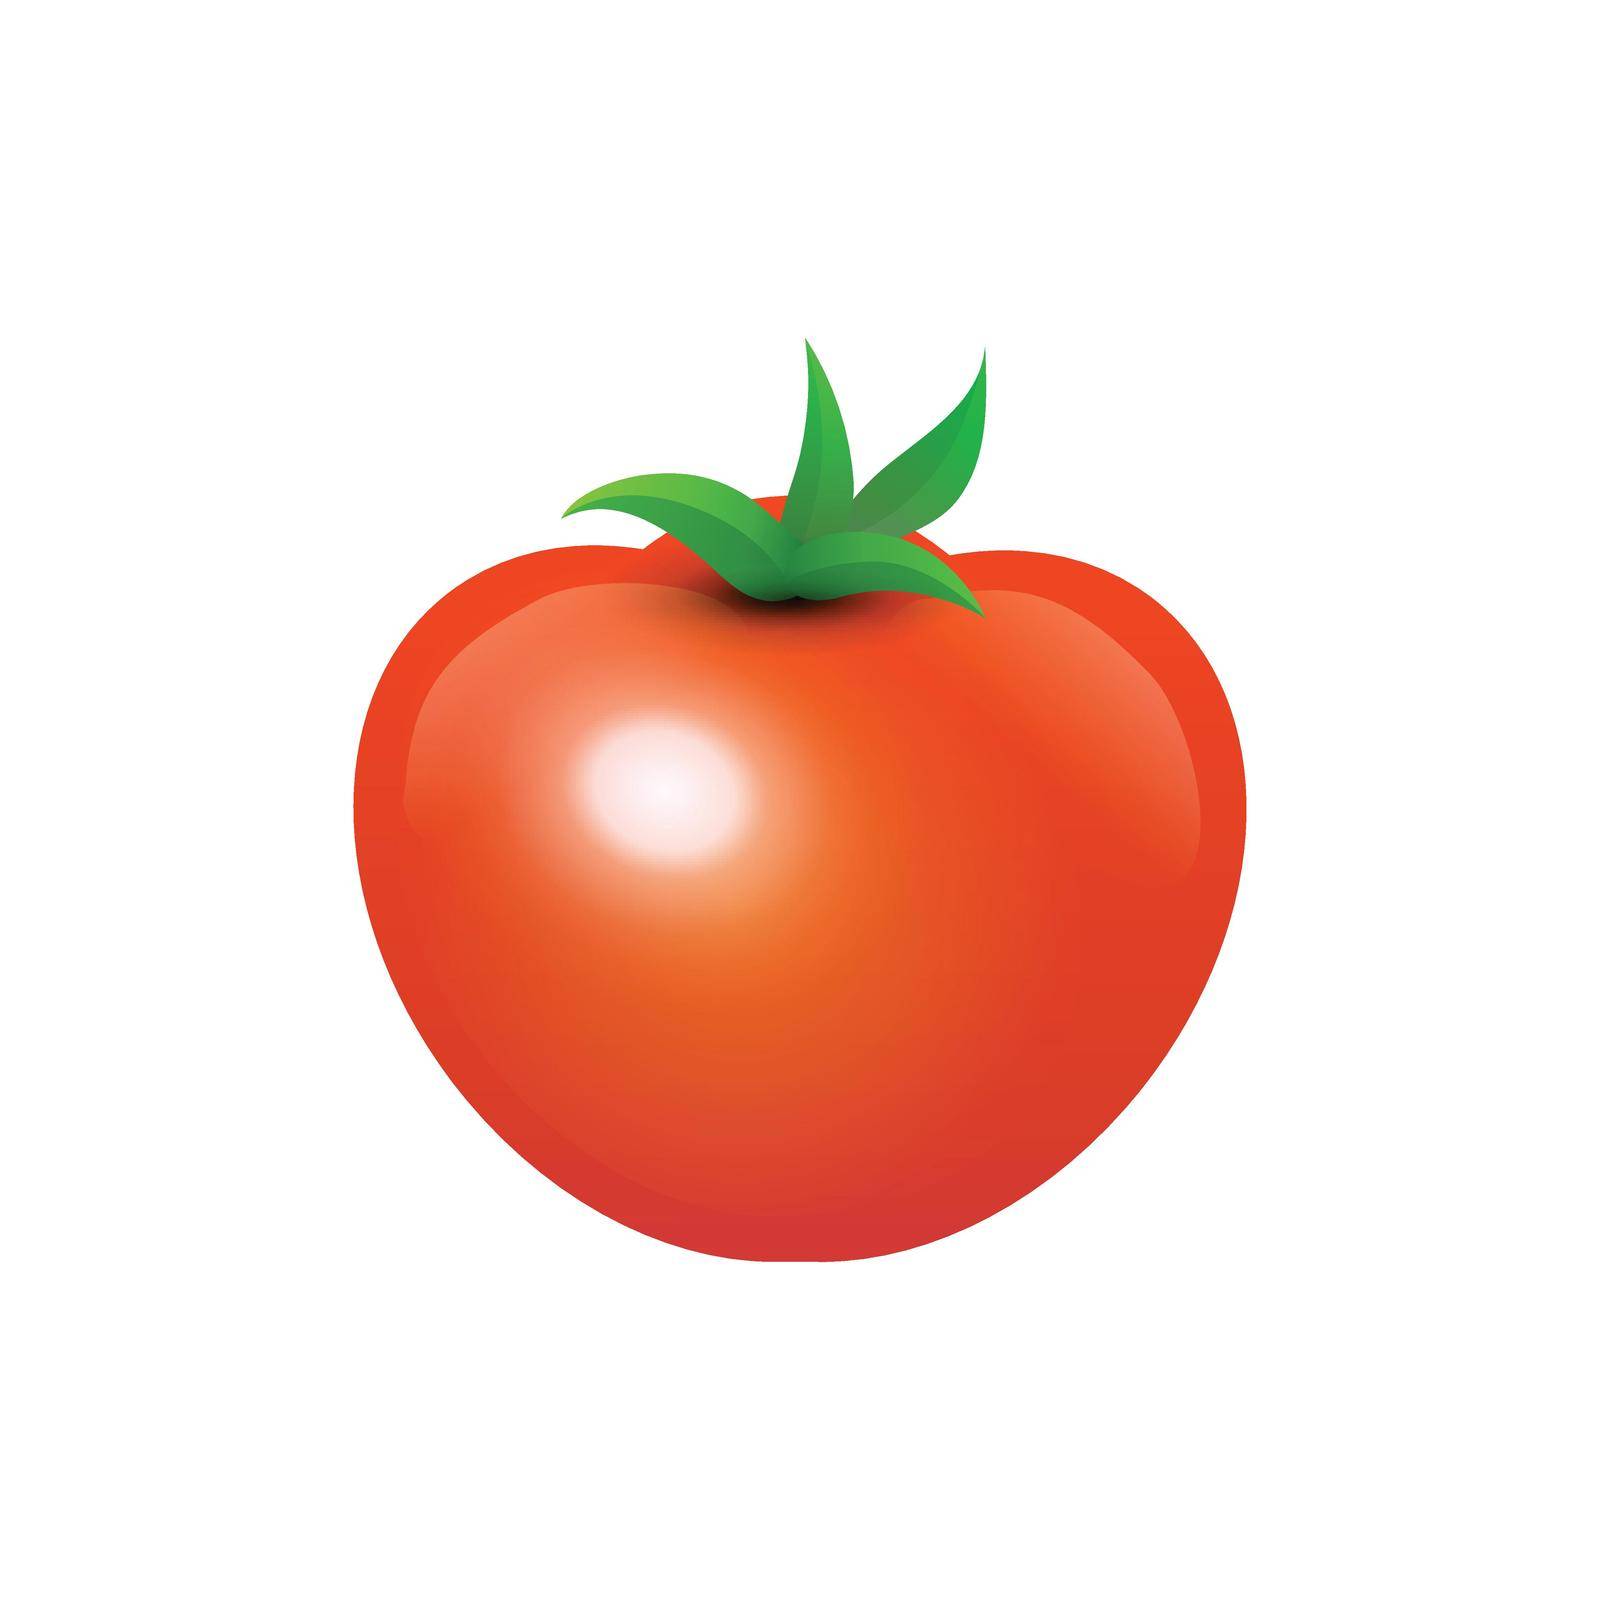 Tasty Juicy Tomato by macroarting